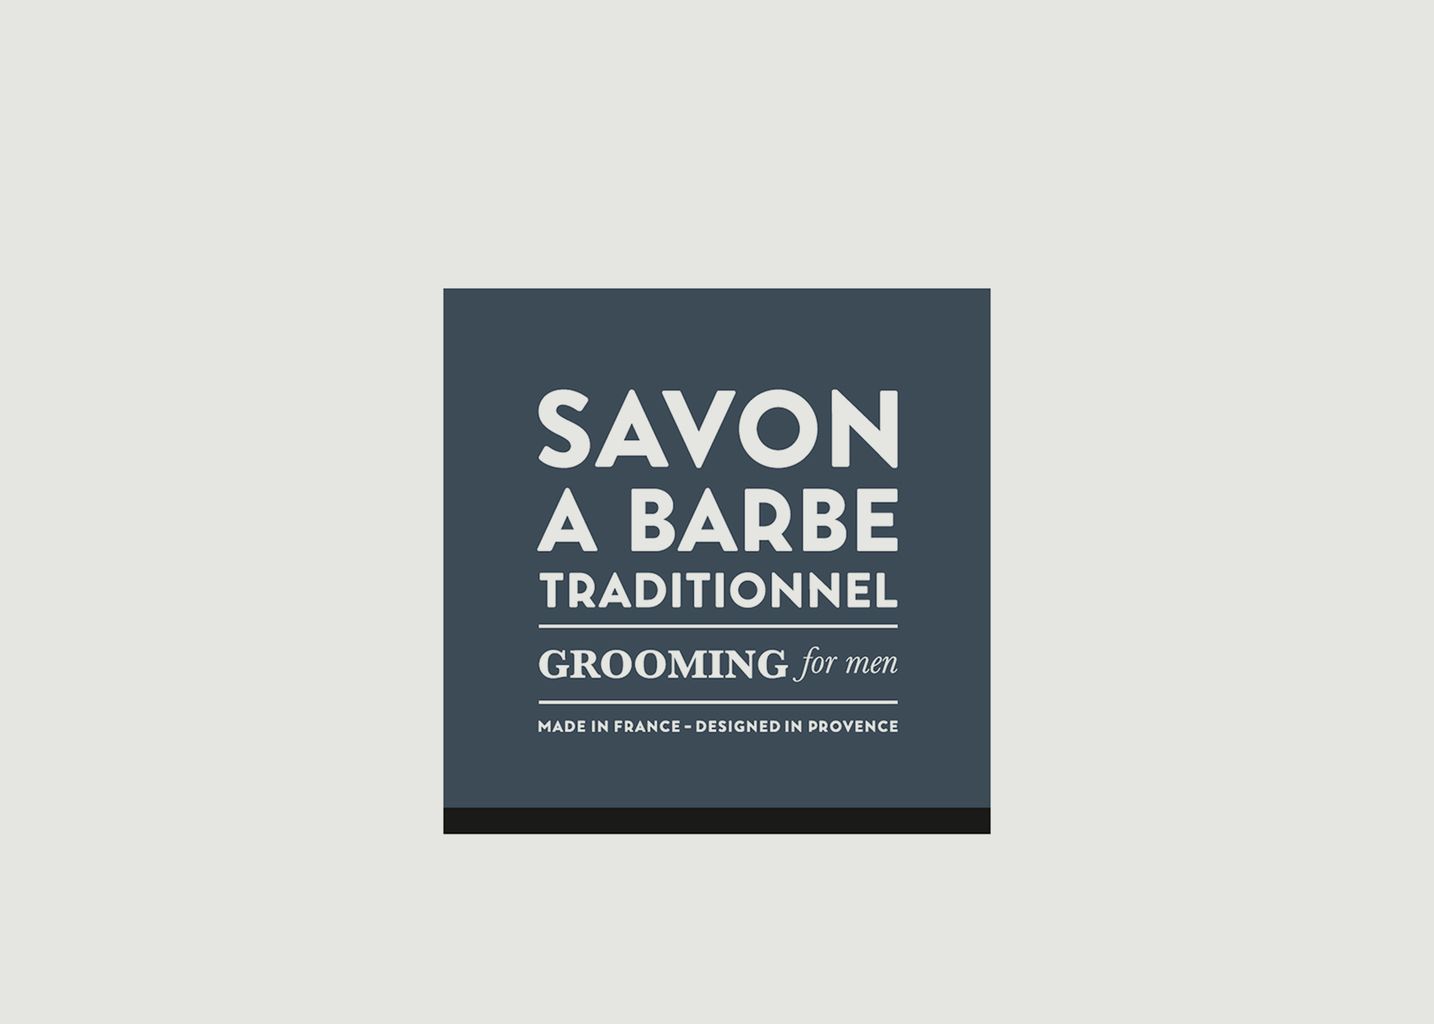 Savon à Barbe Traditionnel Grooming for Men 100g - La Compagnie de Provence